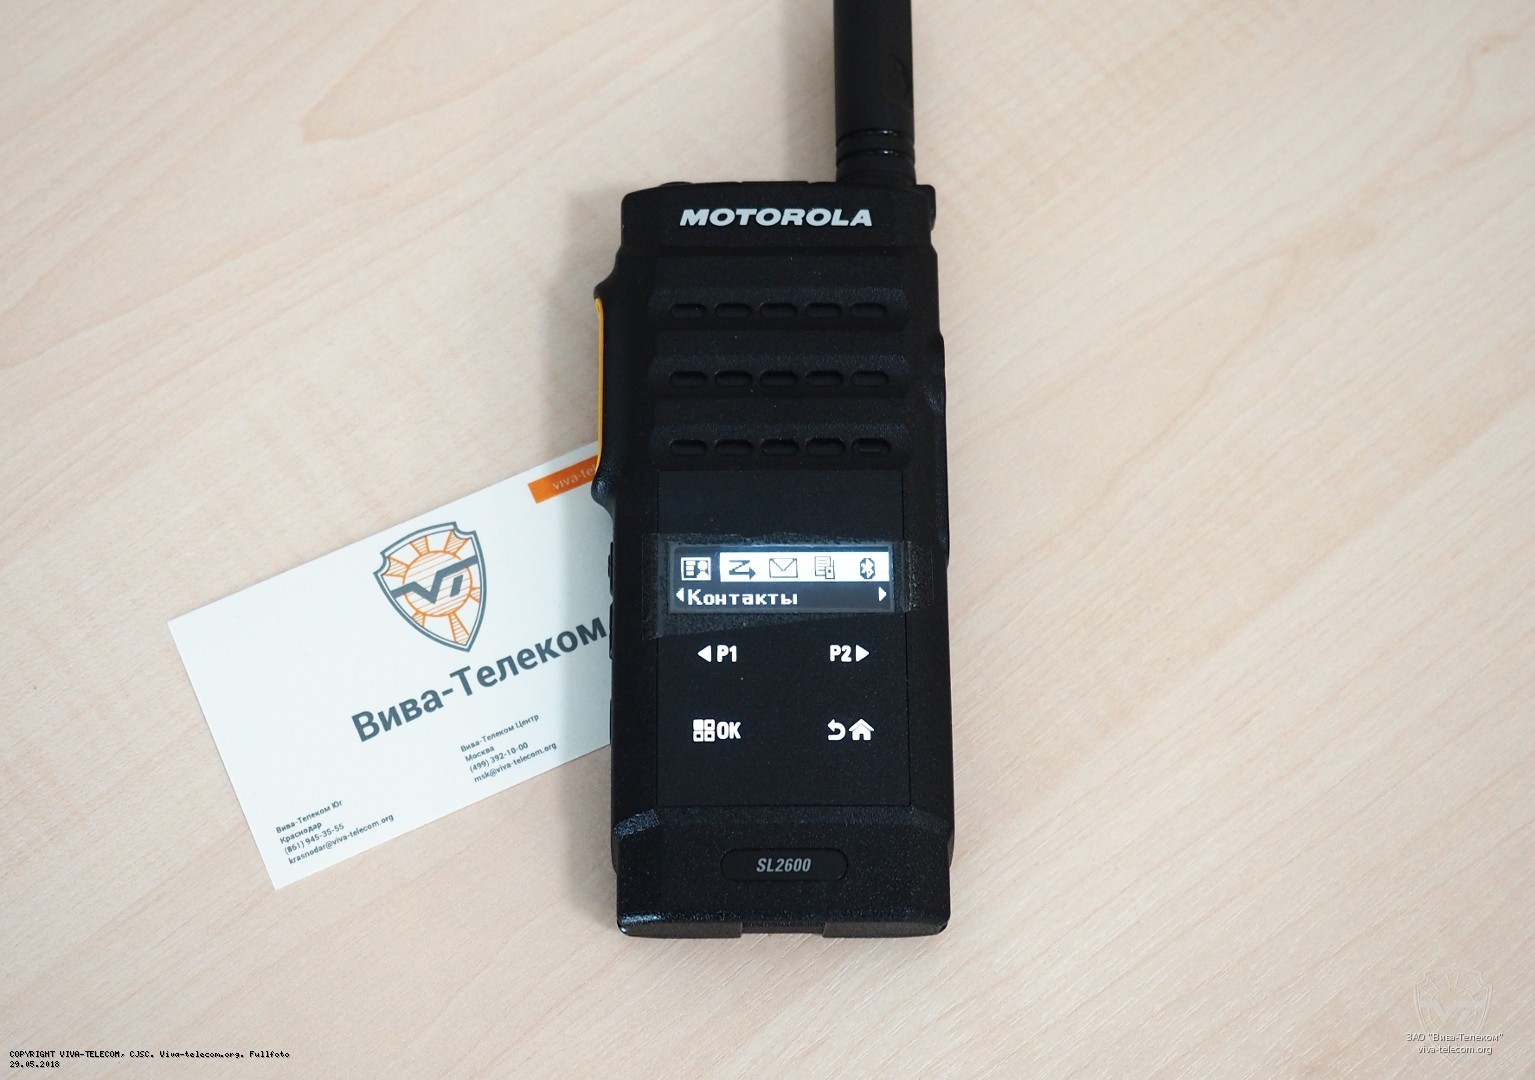    Motorola SL2600